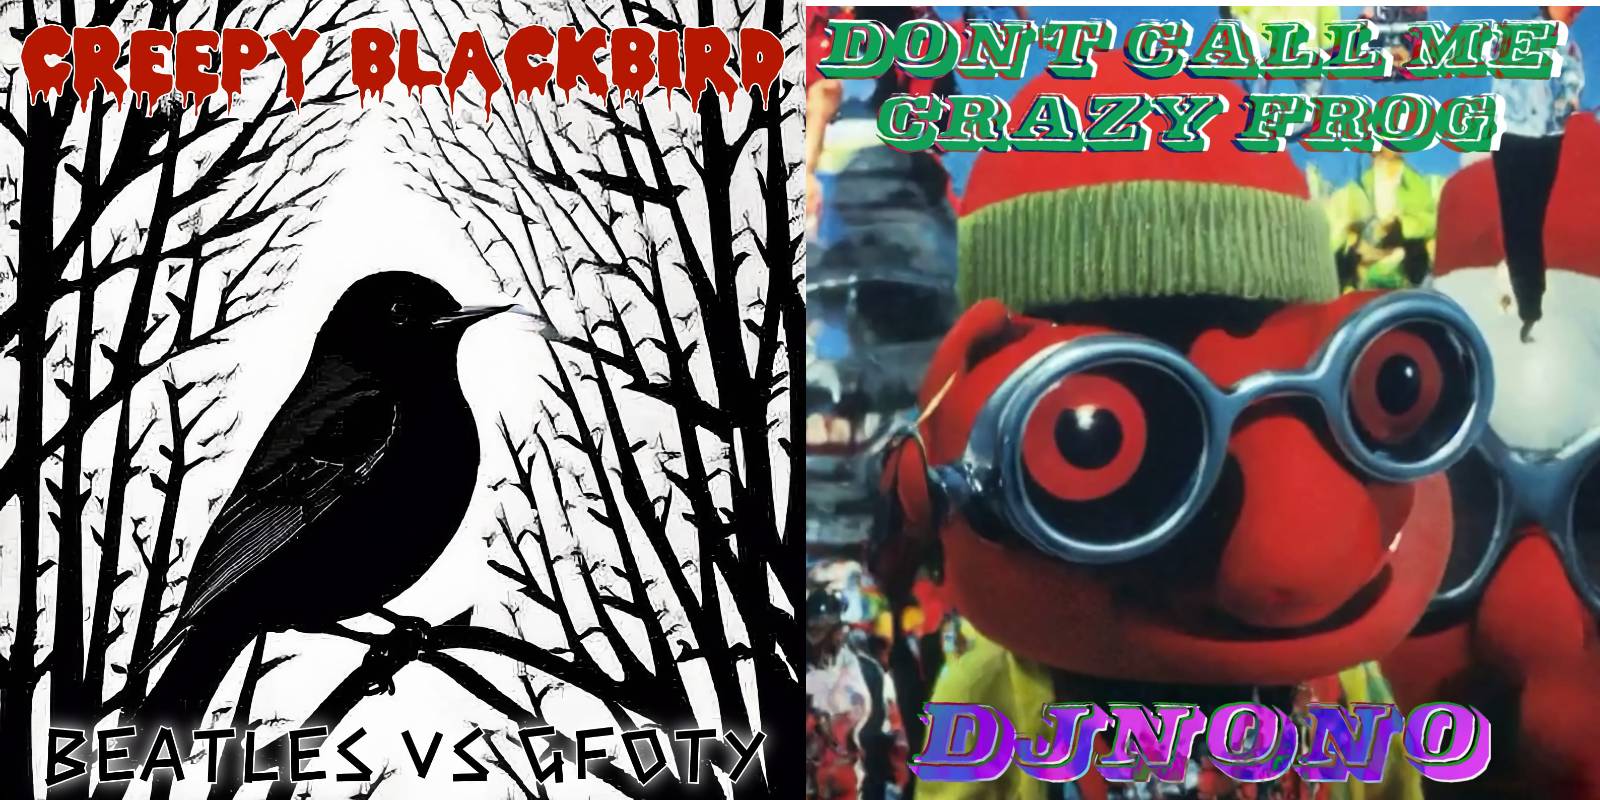 DJNoNo - Don't Call Me Crazy Frog And Go Away (Blondie vs Crazy Frog vs Fleetwood Mac) and DJNoNo - Creepy Blackbird (Beatles vs GFOTY) mashup covers